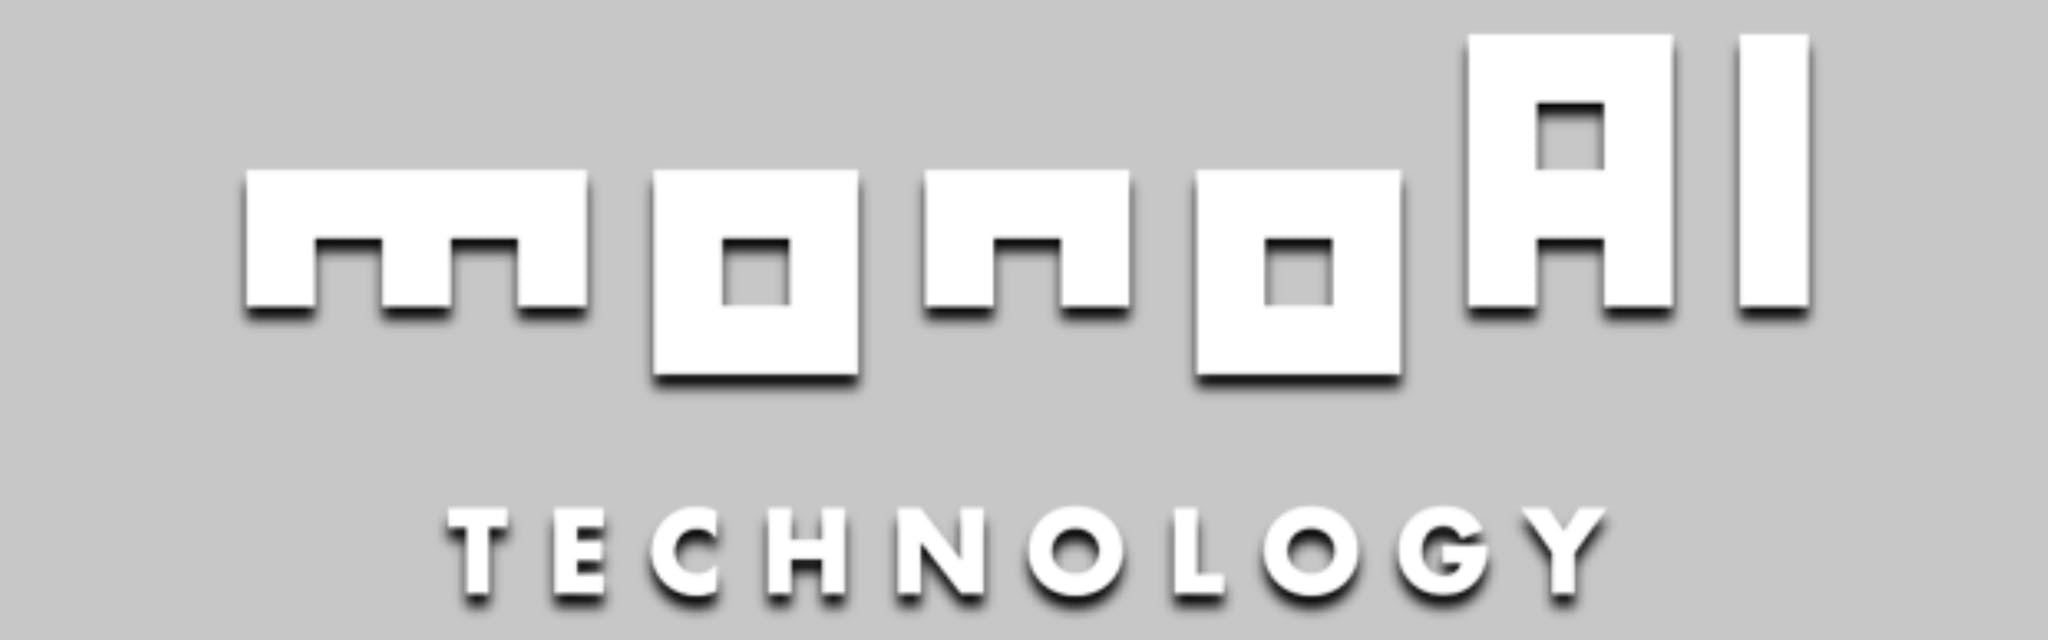 monoAI technology株式会社 - カバー画像